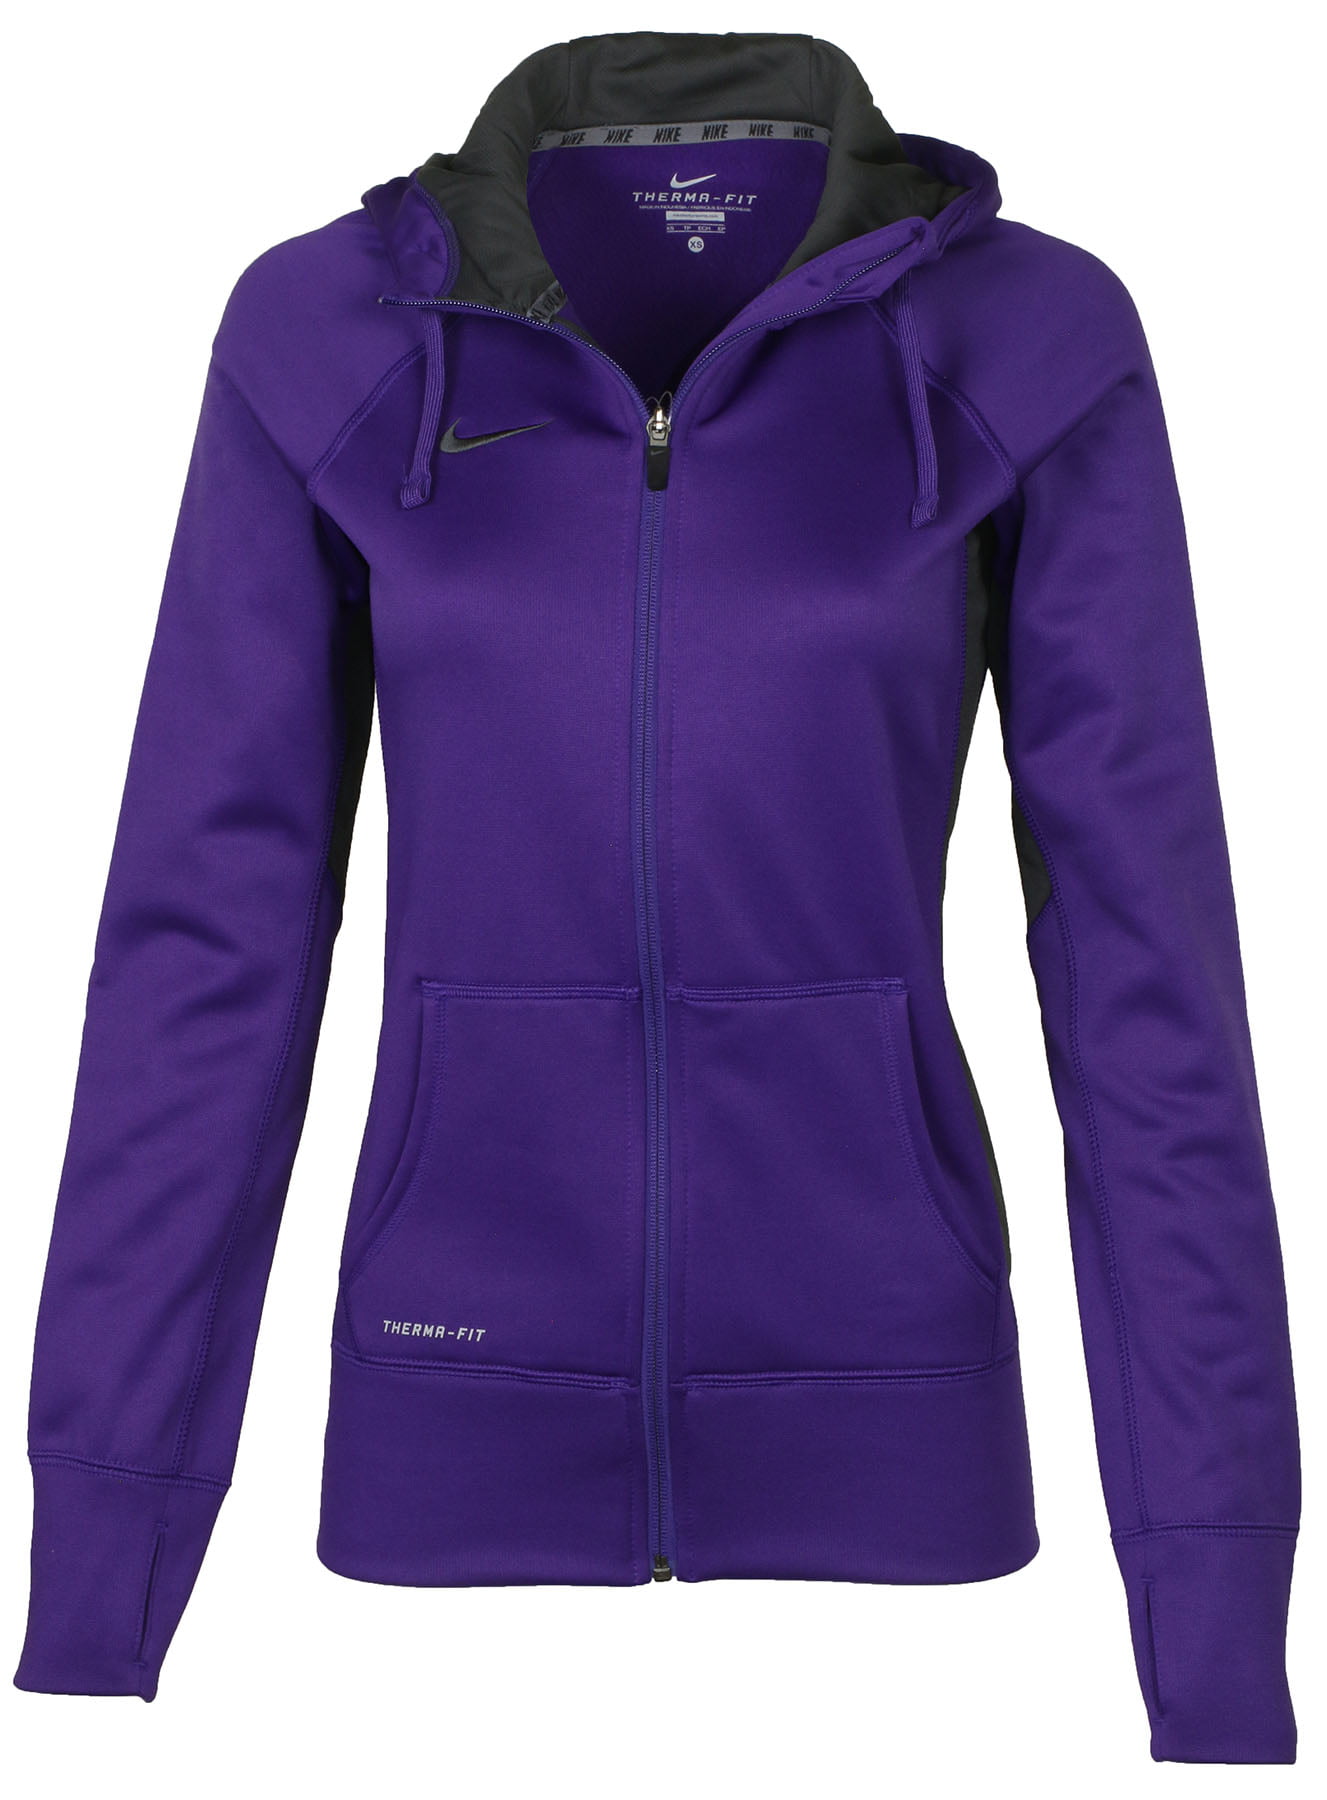 Nike - Nike Women's Therma-Fit KO Hoodie-Purple Royal - Walmart.com ...